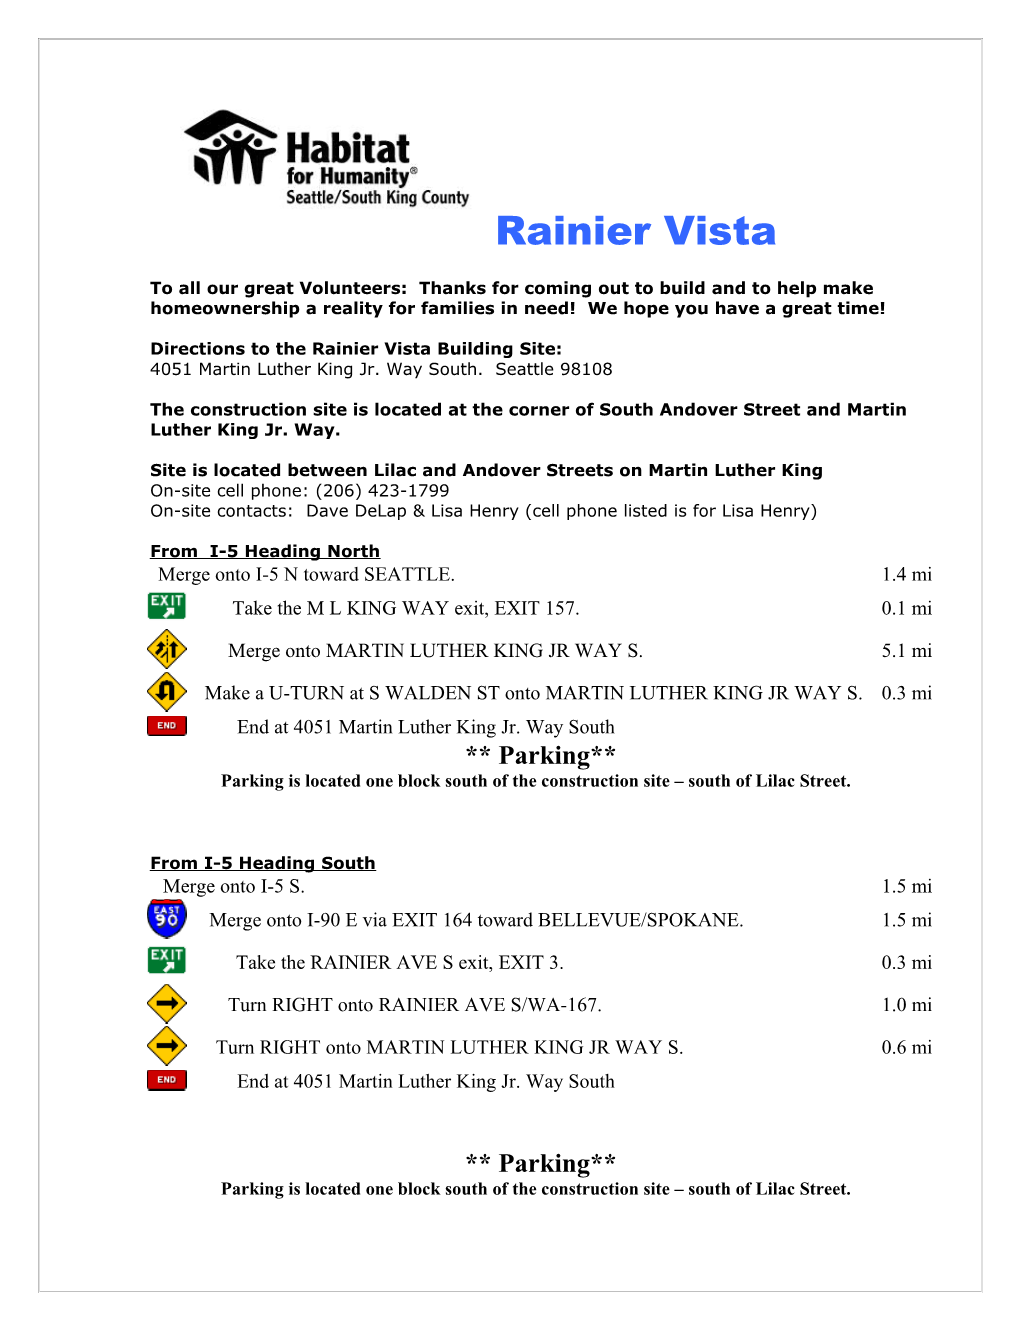 Directions to the Rainiervistabuilding Site